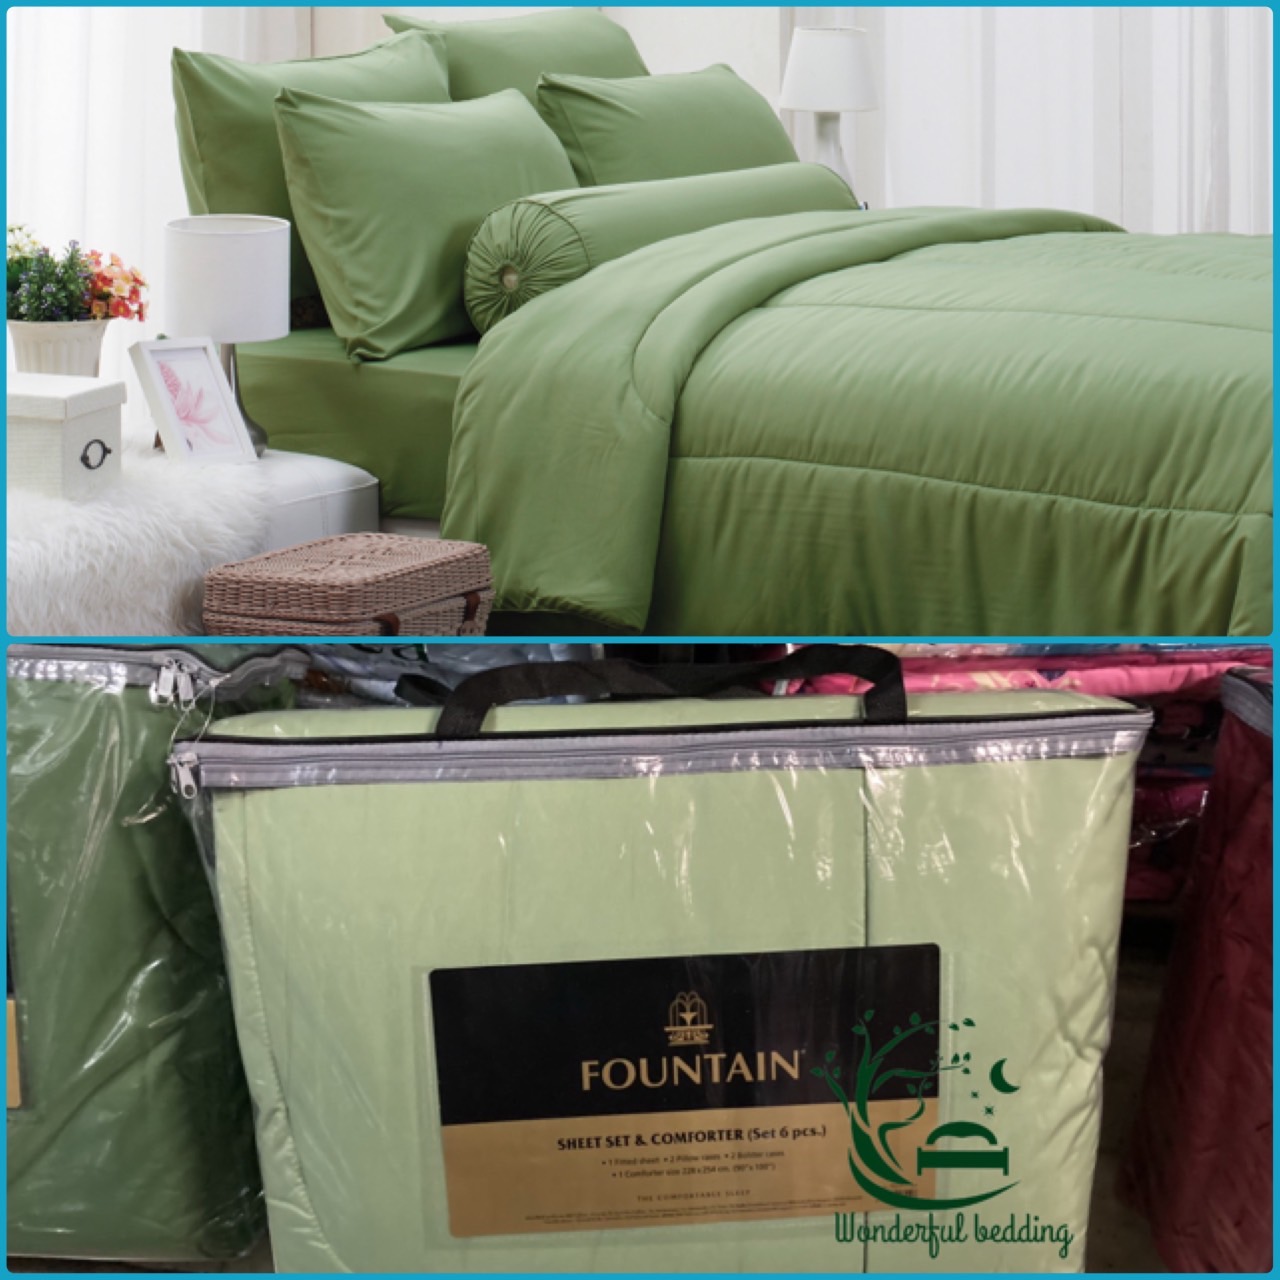 FOUNTAIN ชุดผ้าปู (ไม่มีผ้านวม) ผ้าปู ที่นอน แท้ 100% FTC สีพื้น เขียว Green Gray เทา ขนาด 3.5 5 6ฟุต ชุดเครื่องนอน ผ้านวม ผ้าปูที่นอน wonderful bedding  variation3 Green2ขนาดสินค้า 3.5 ฟุต